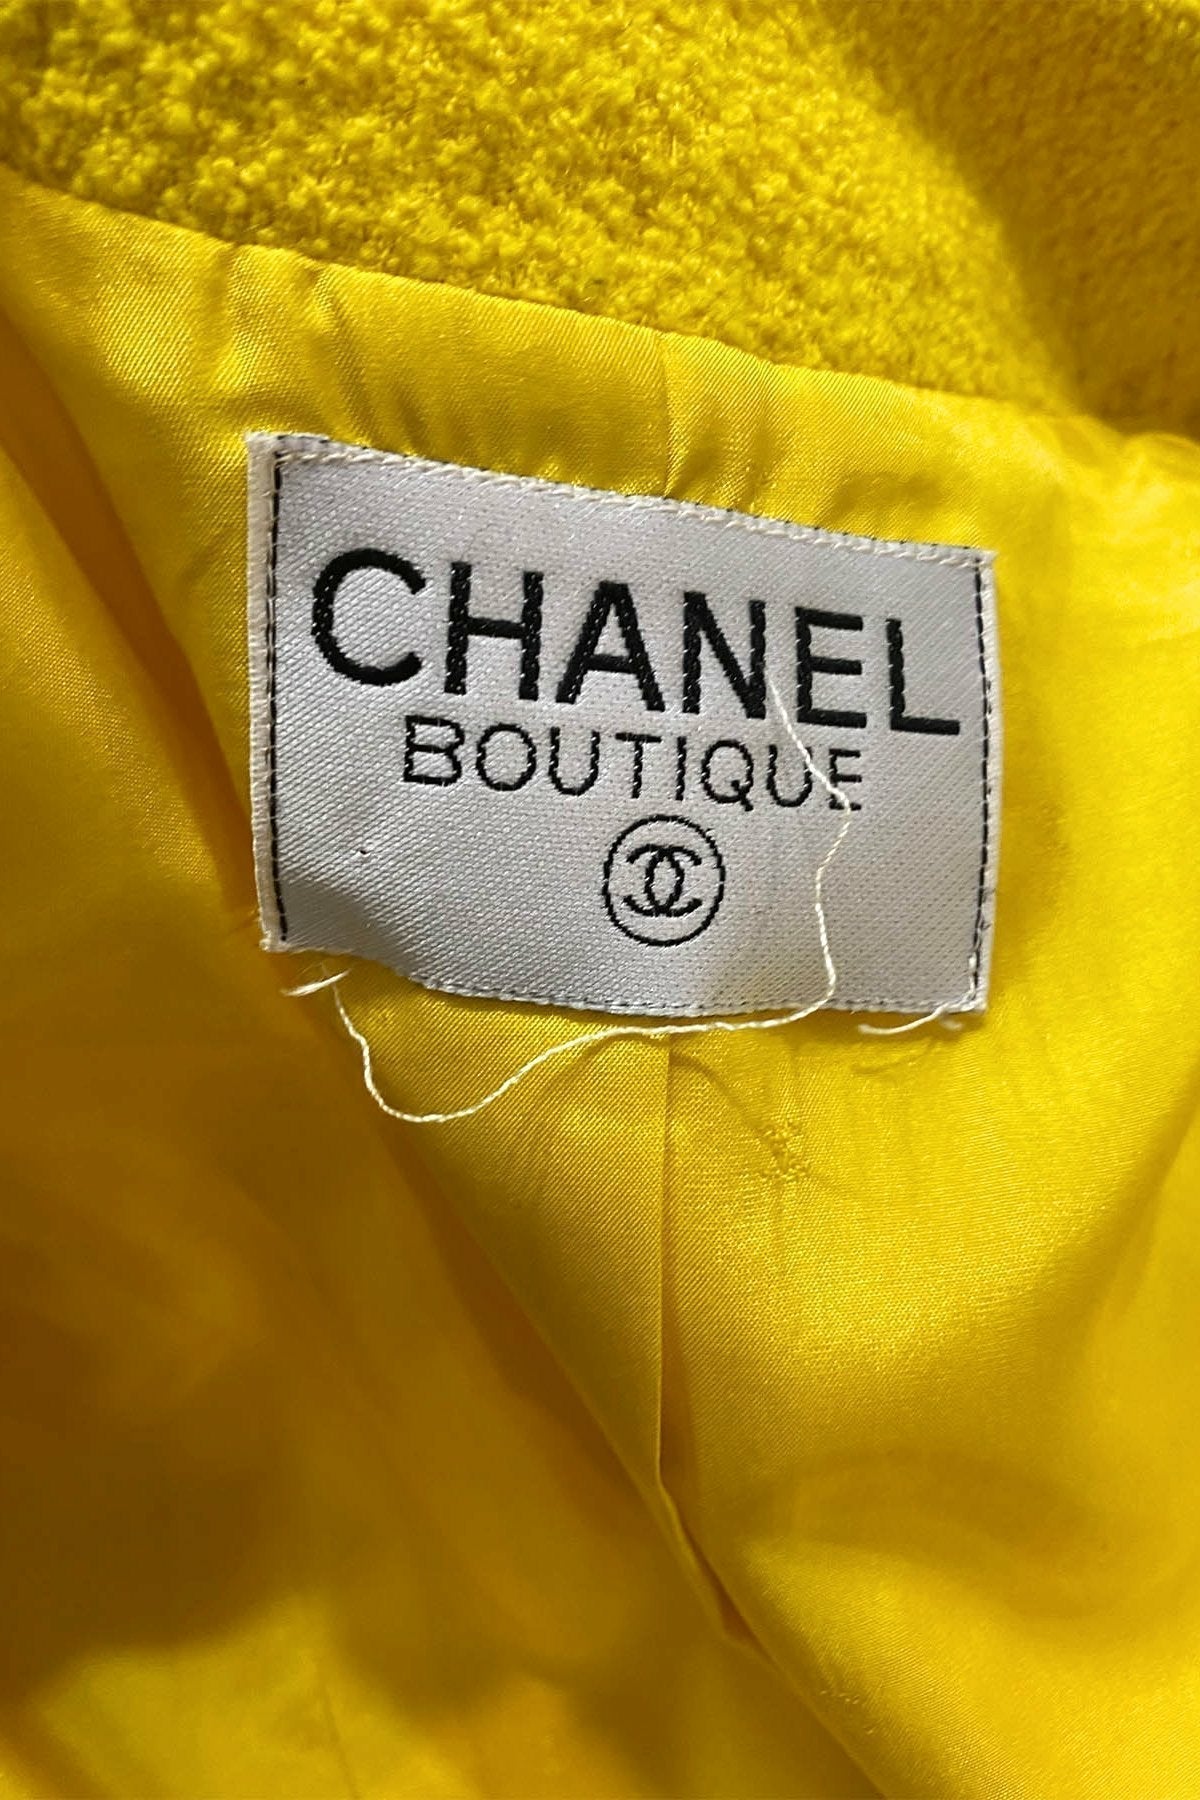 Chanel Boutique Iconic Jacket Vintage 1993